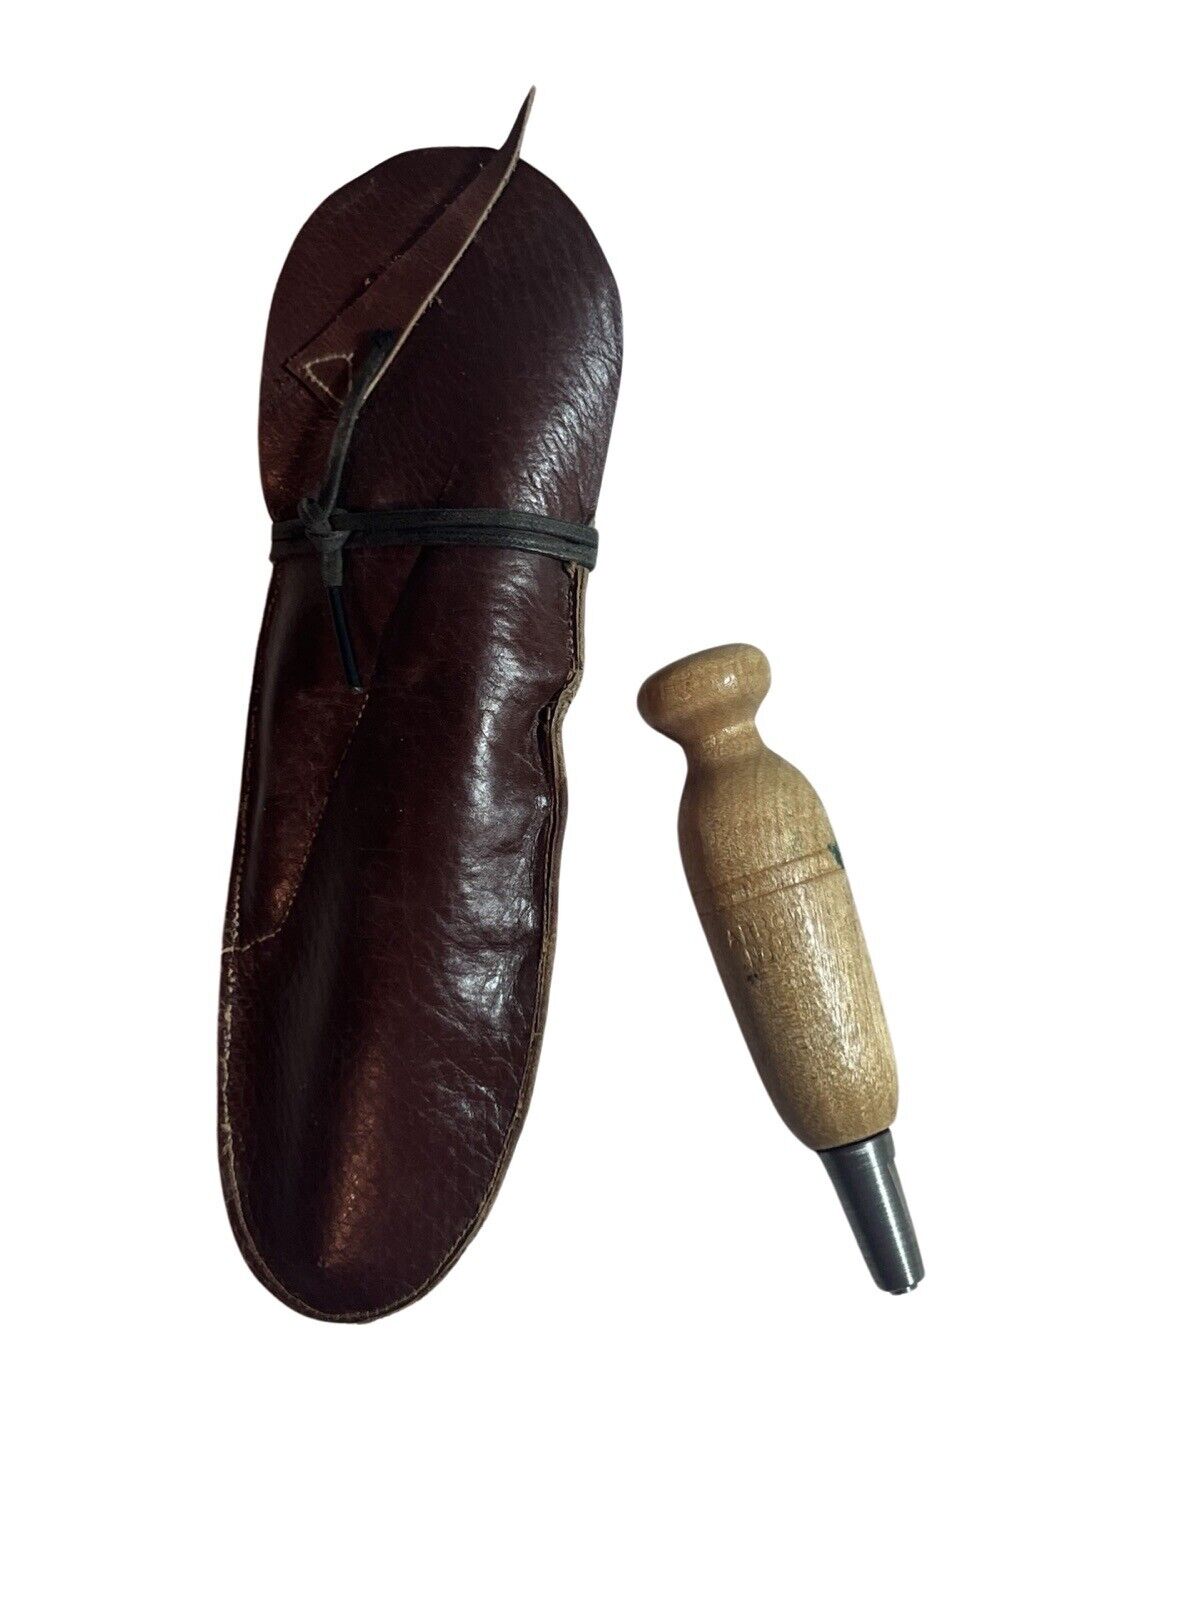 Antique Cobbler Tool. Arrow No. 2. With Original Leather Pouch